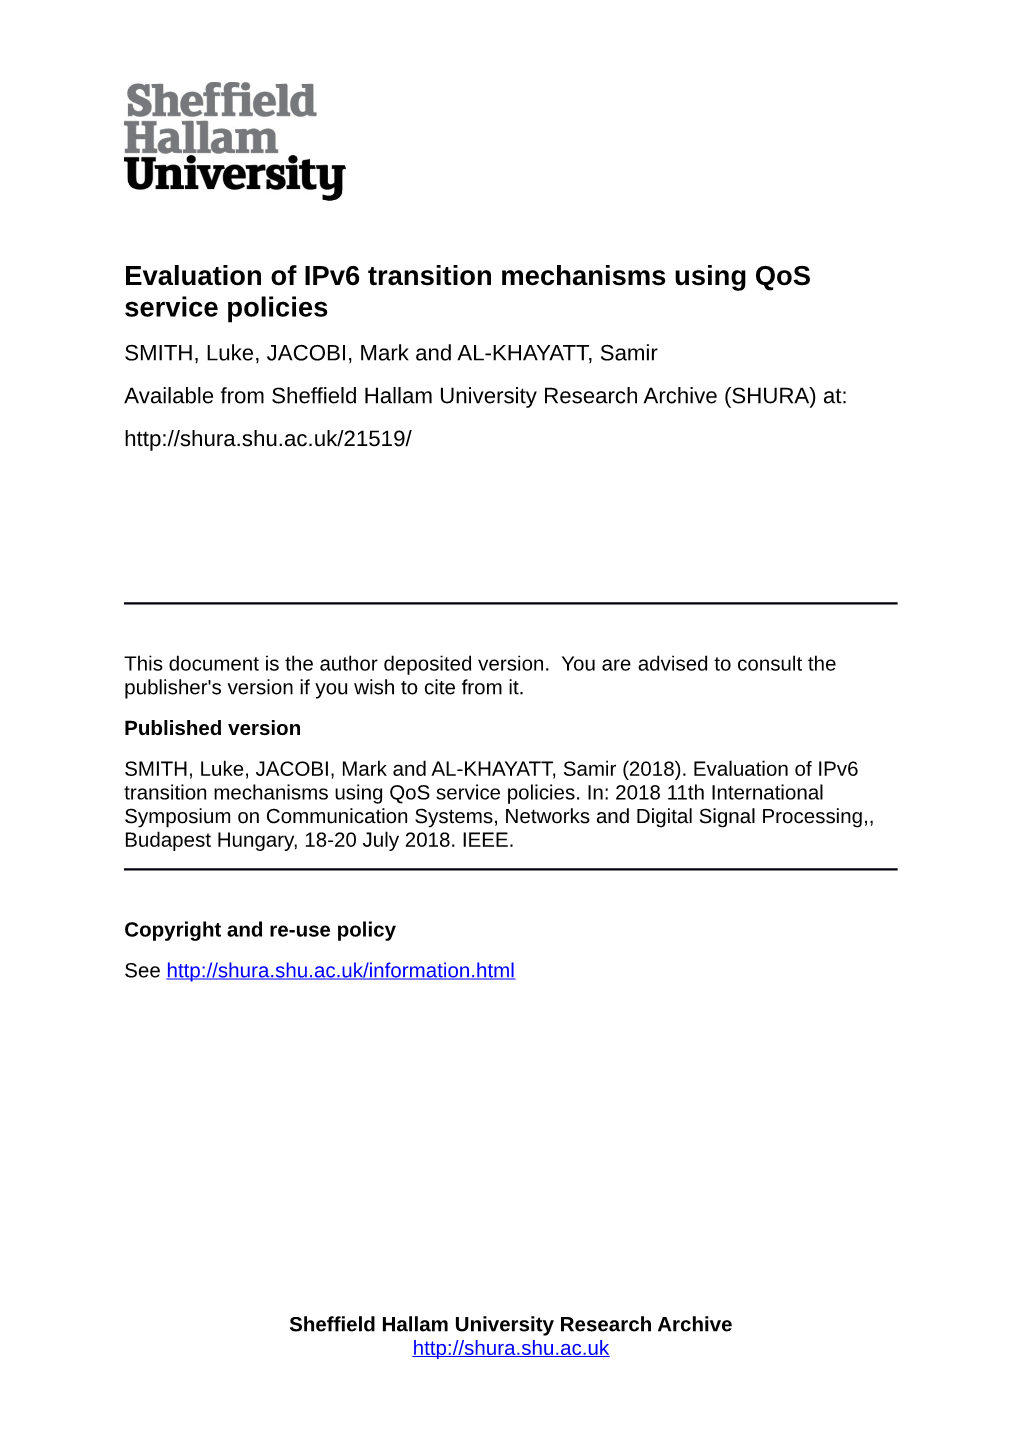 Evaluation of Ipv6 Transition Mechanisms Using Qos Service